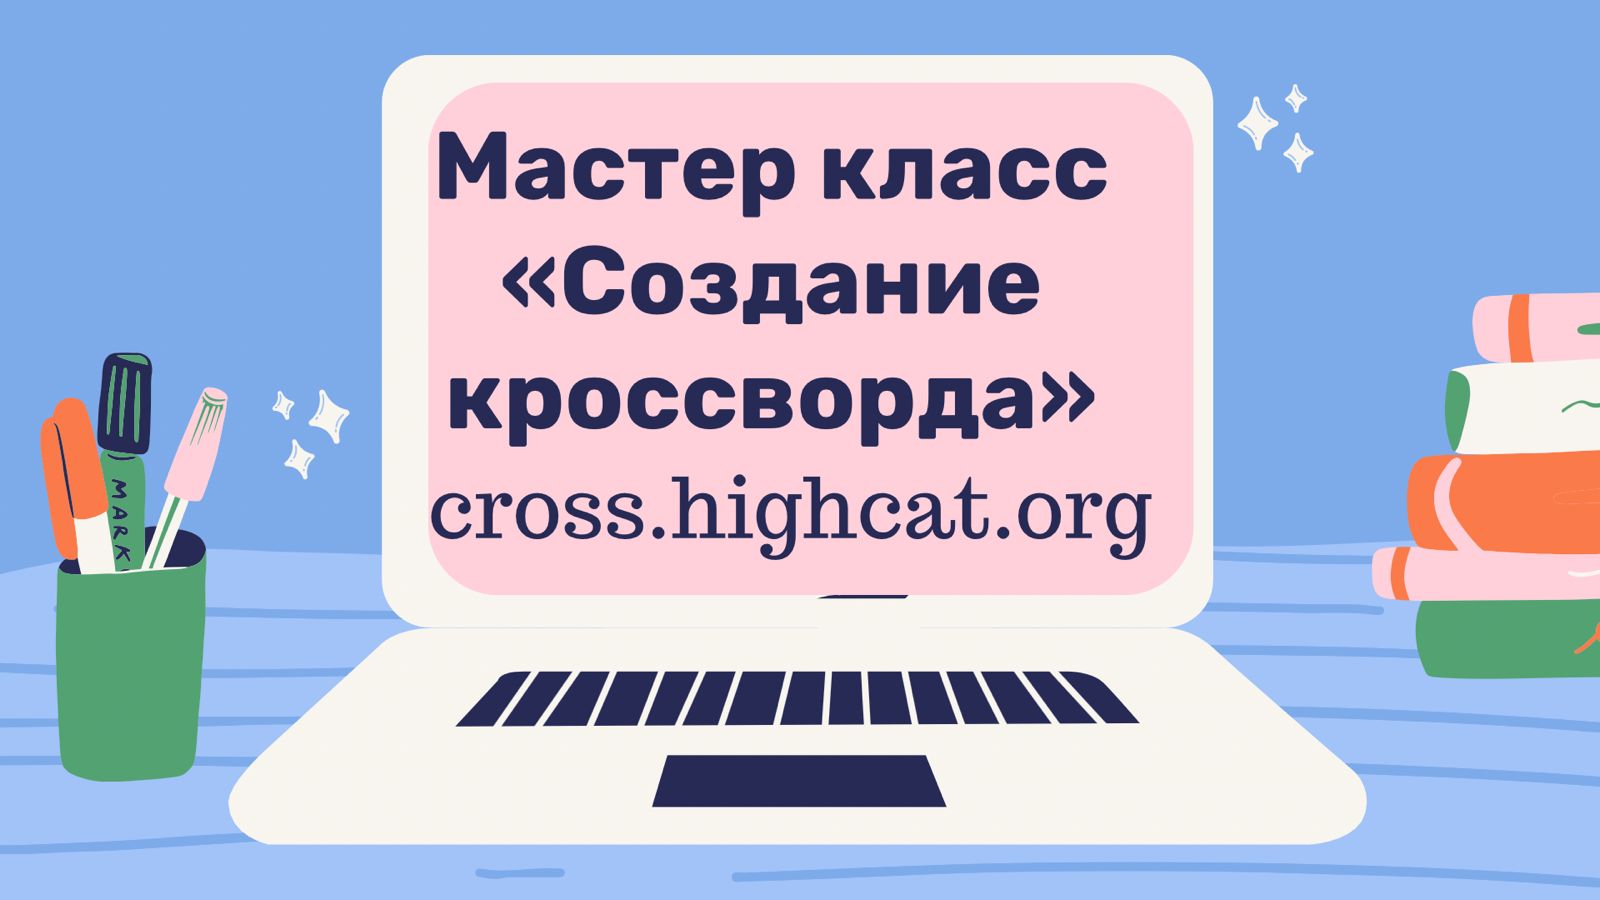 “Создание кроссвордов в онлайн сервисе Cross.highcat.org” Мастер класс